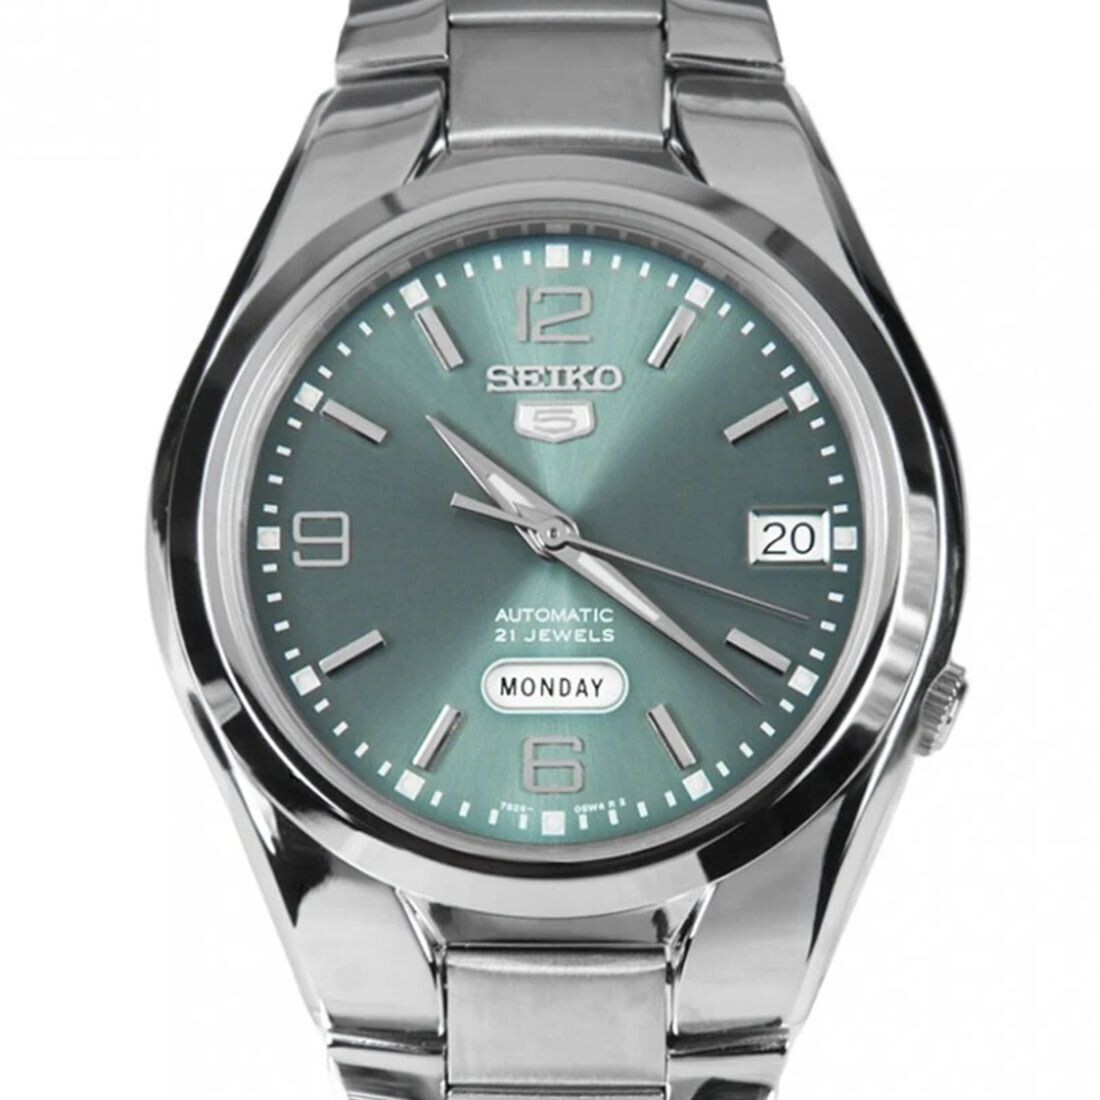 Reloj Seiko 5 automatic SNK621K1 38mm silver grey dial